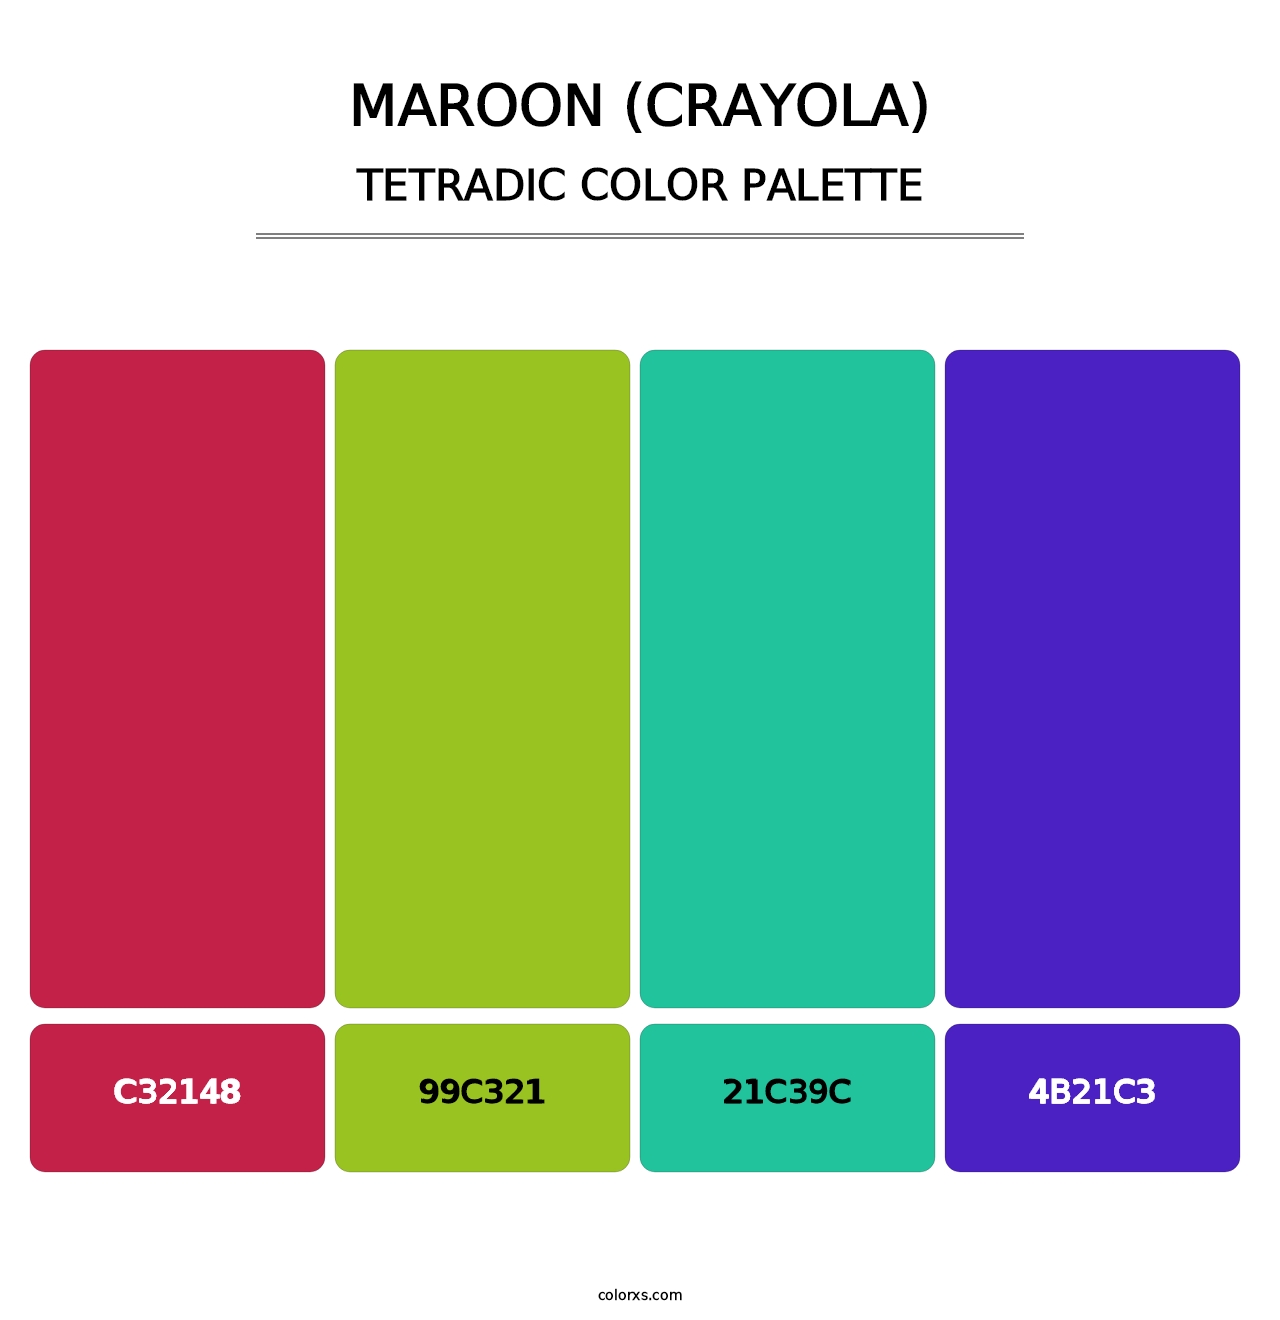 Maroon (Crayola) - Tetradic Color Palette